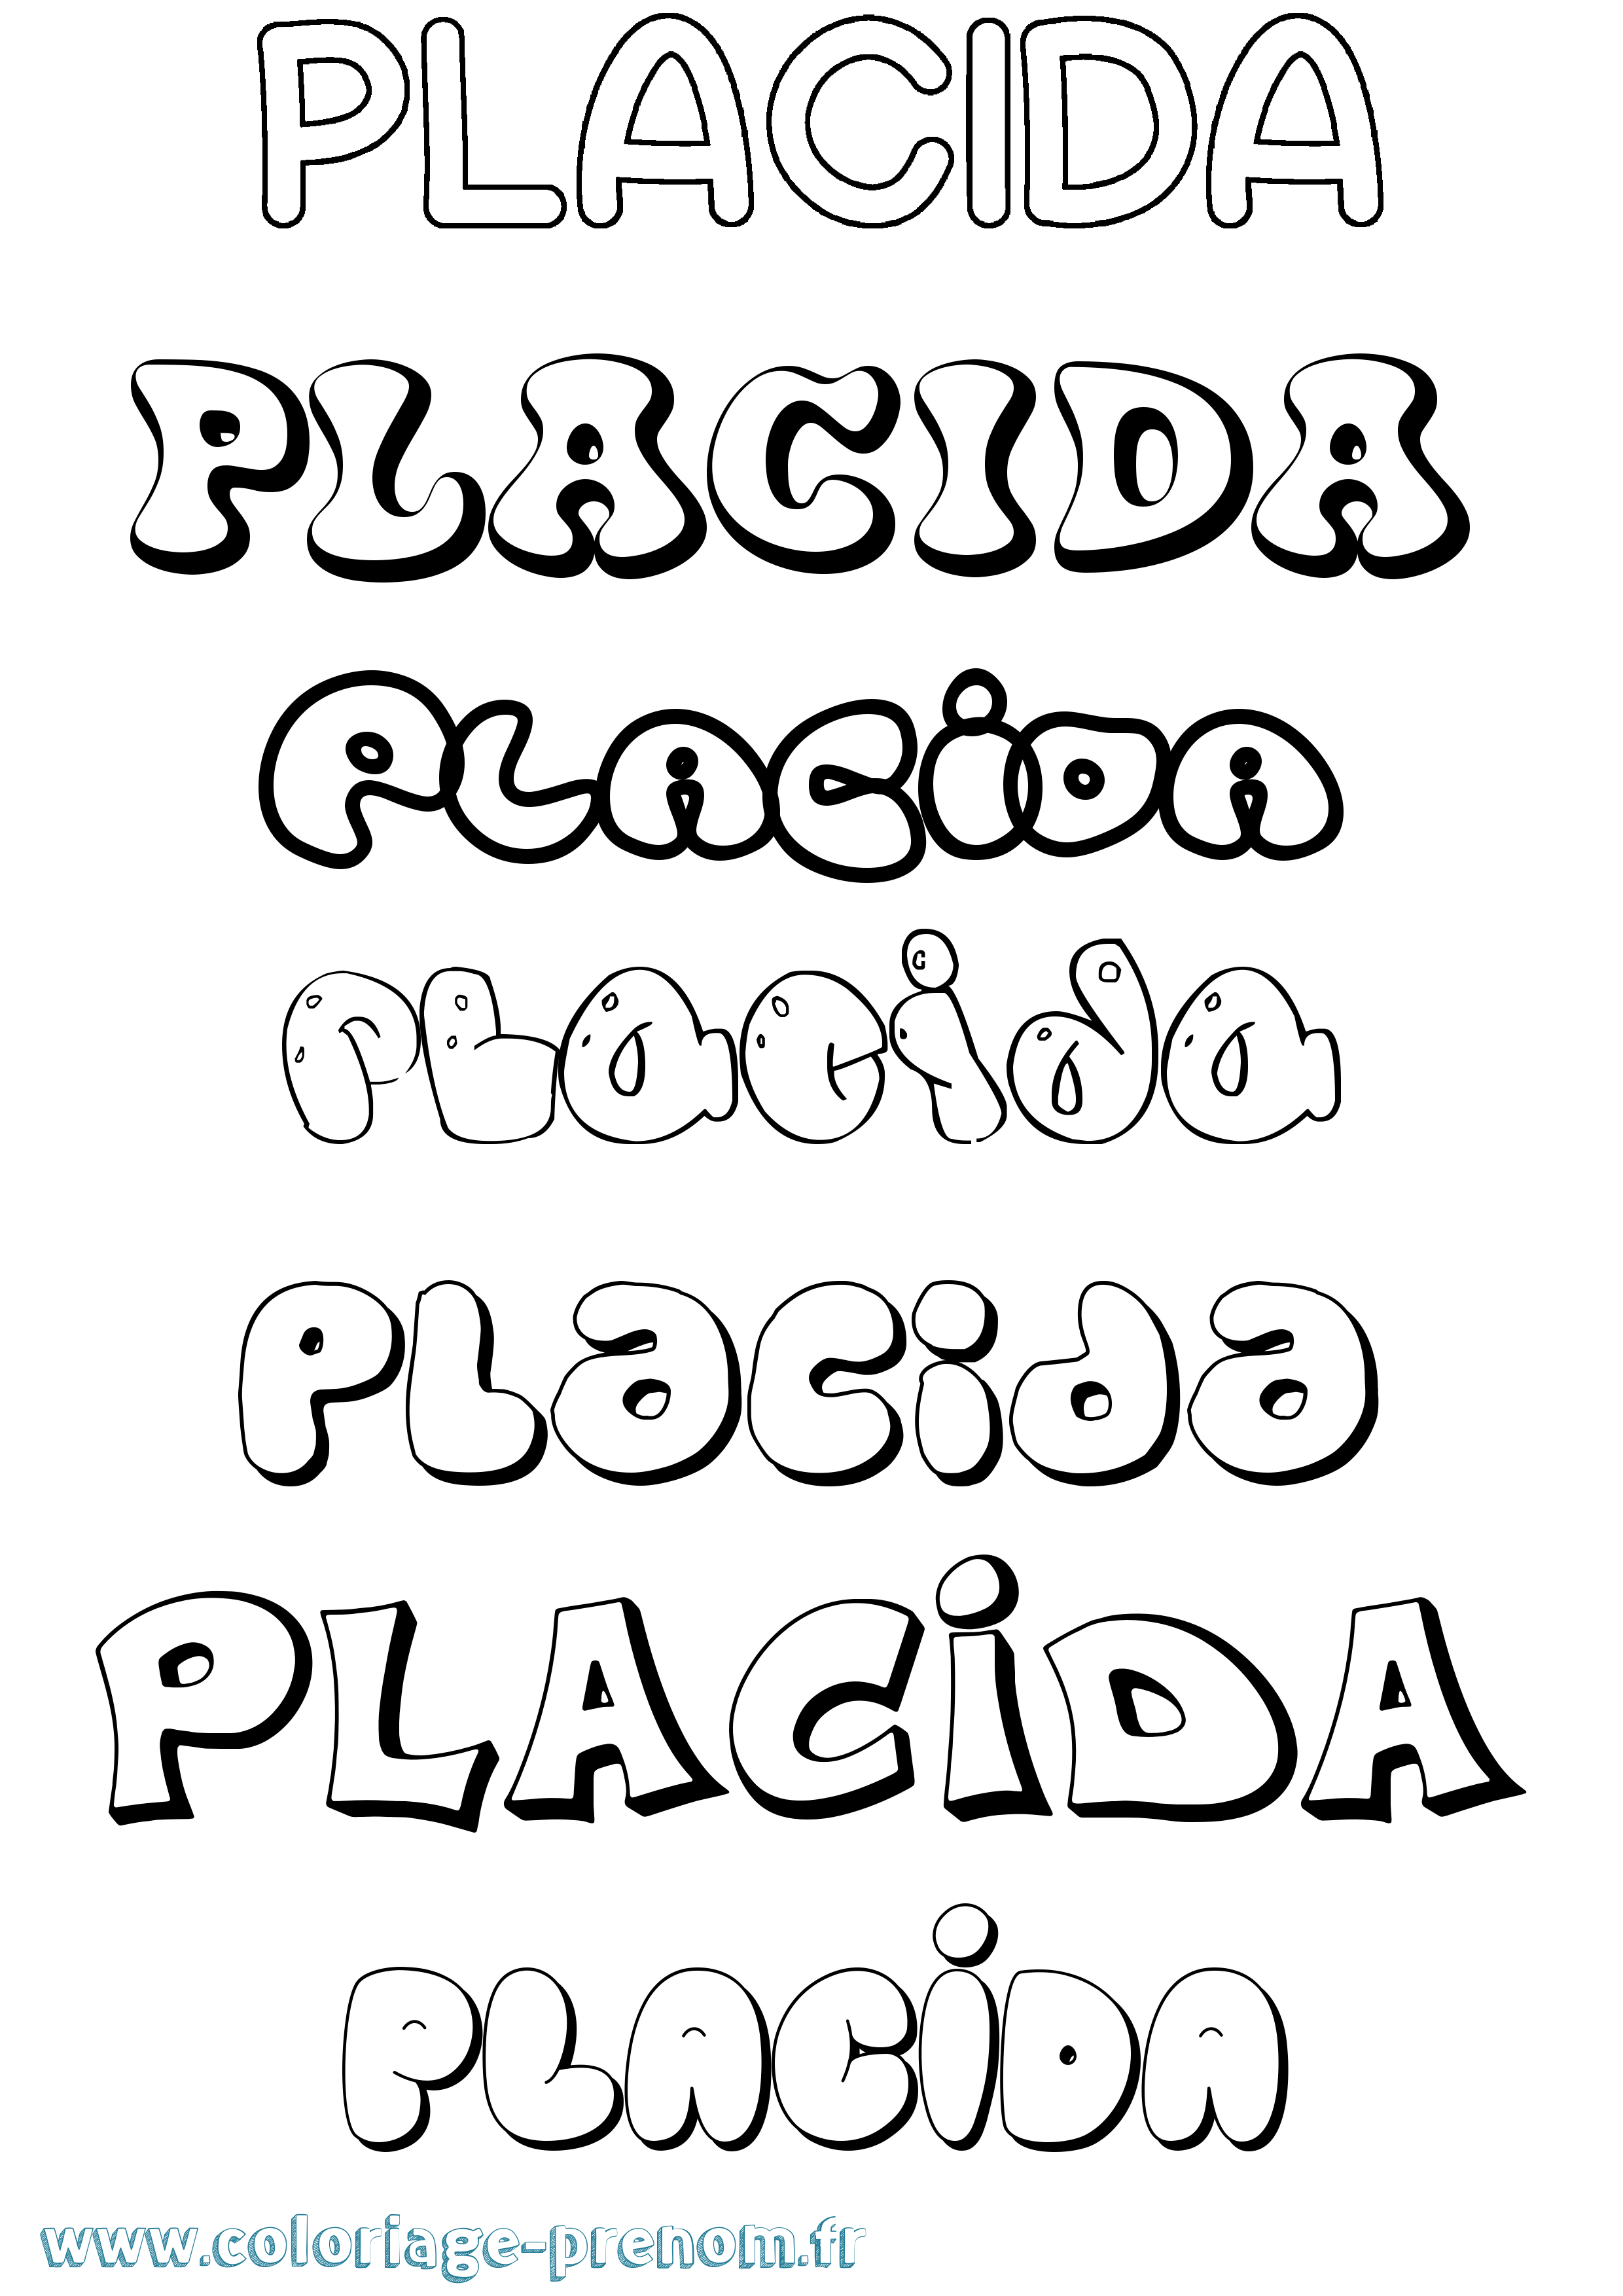 Coloriage prénom Placida Bubble